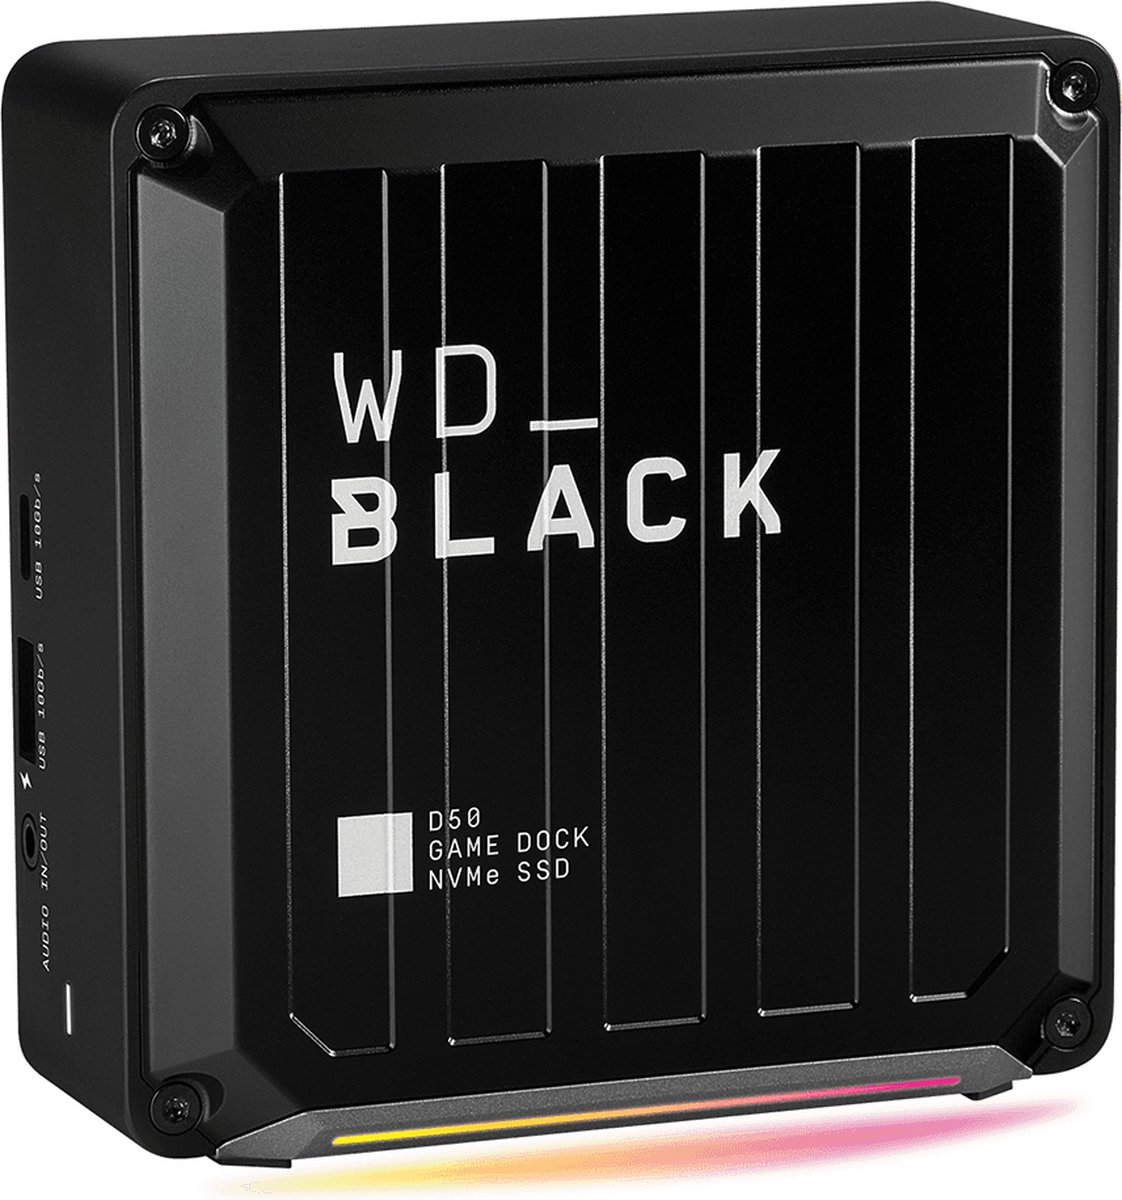 WD - Western Digital WD Black Game Dock SSD D50 desk 2TB